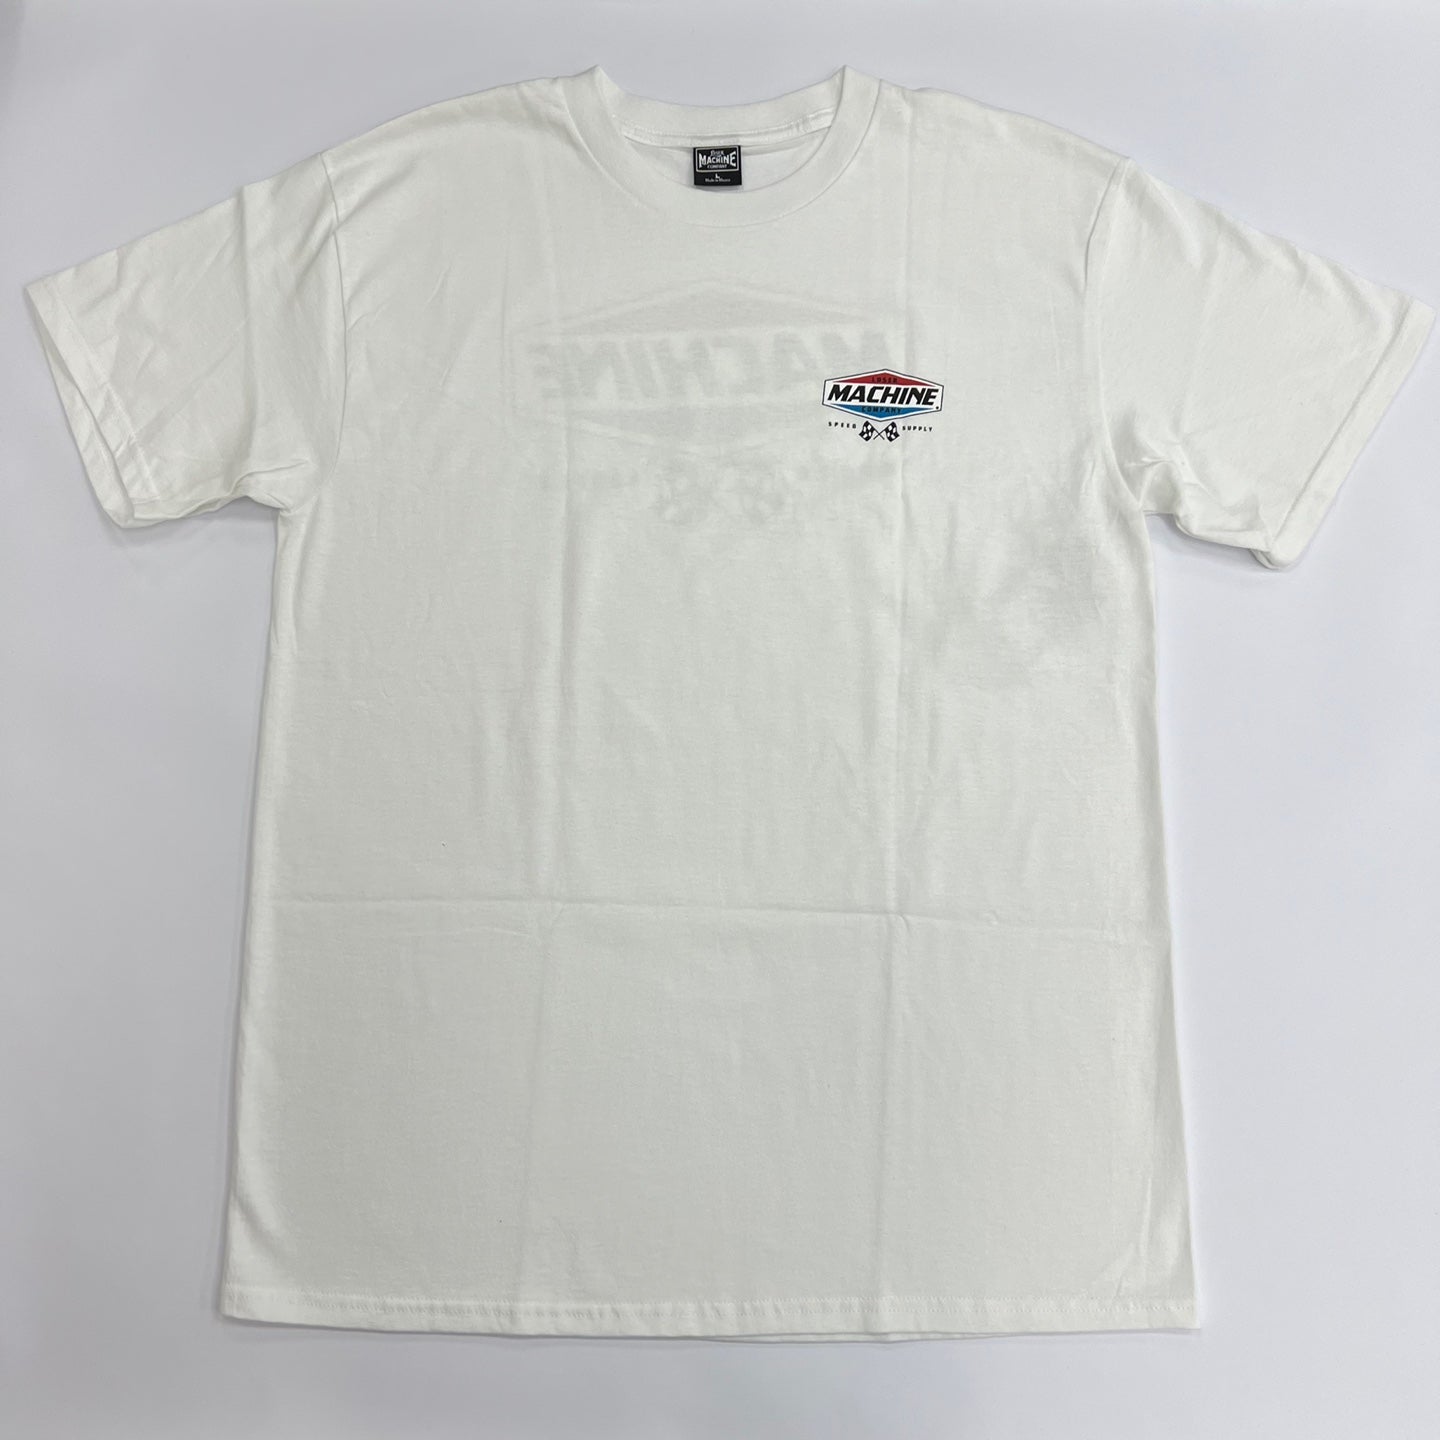 LOSER MACHINE Overdrive Speed Graphic T-Shirt - WHITE